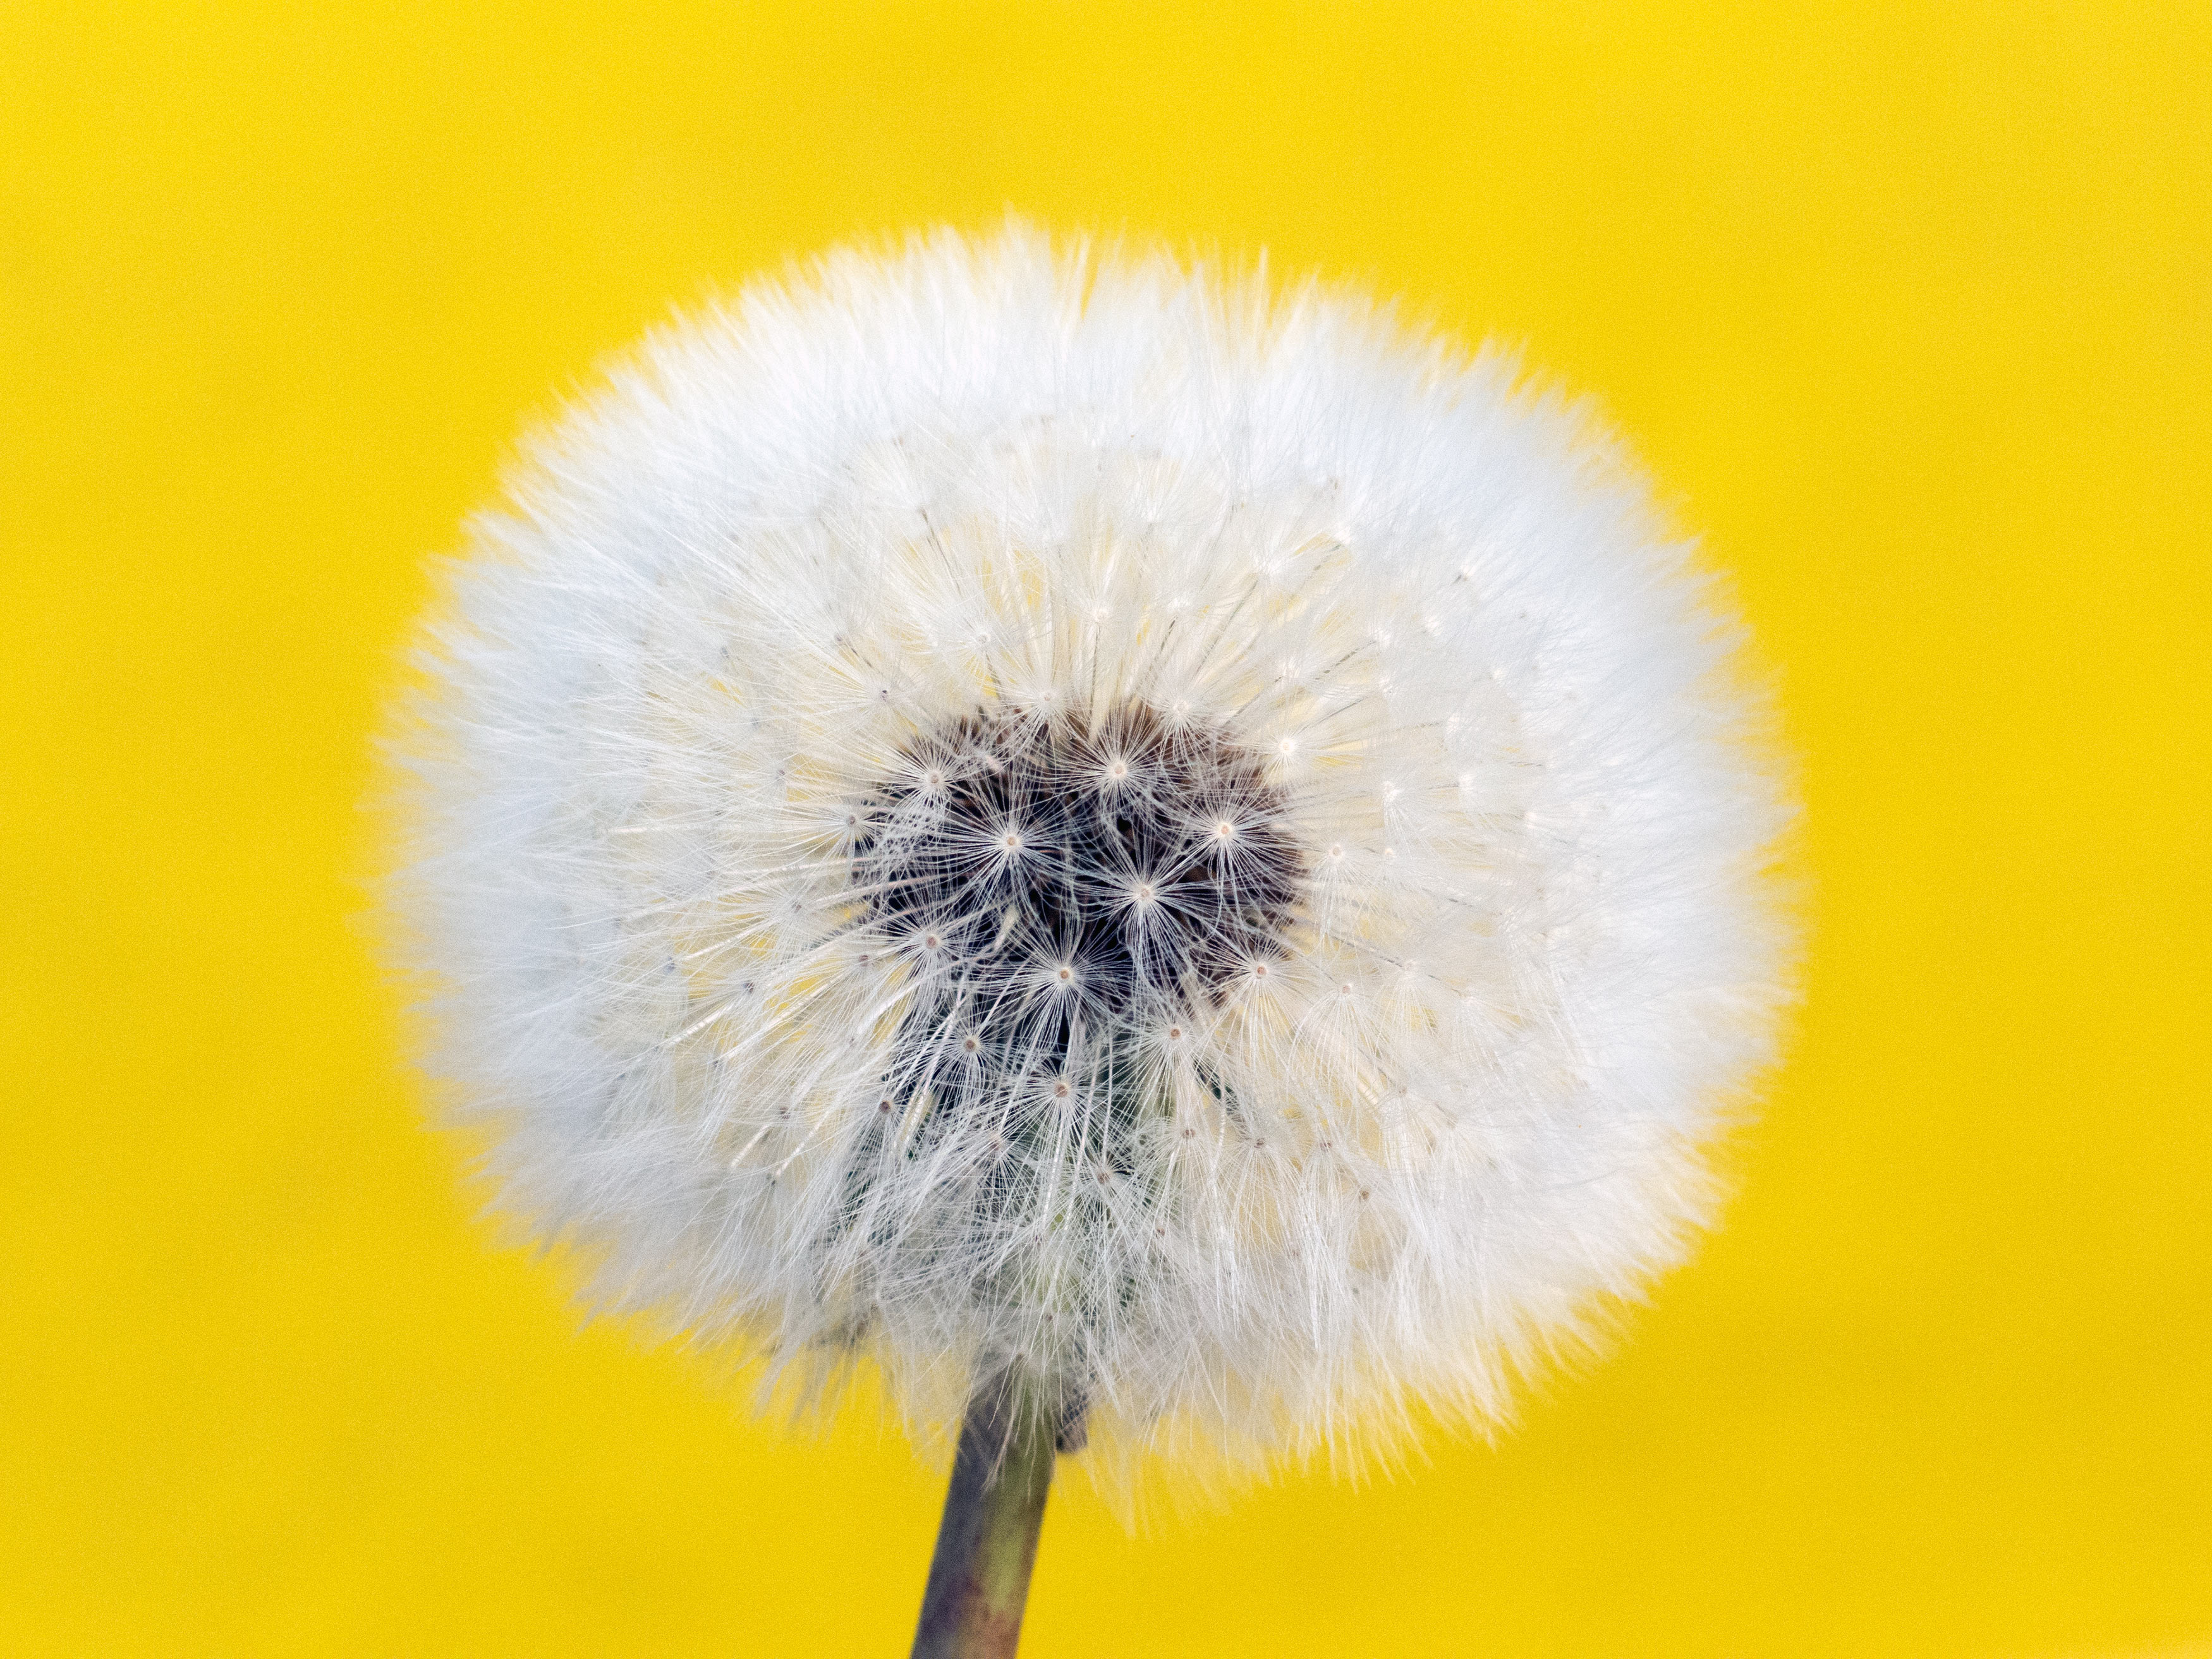 Free Image: Withered Dandelion - Yellow Background | Libreshot ...